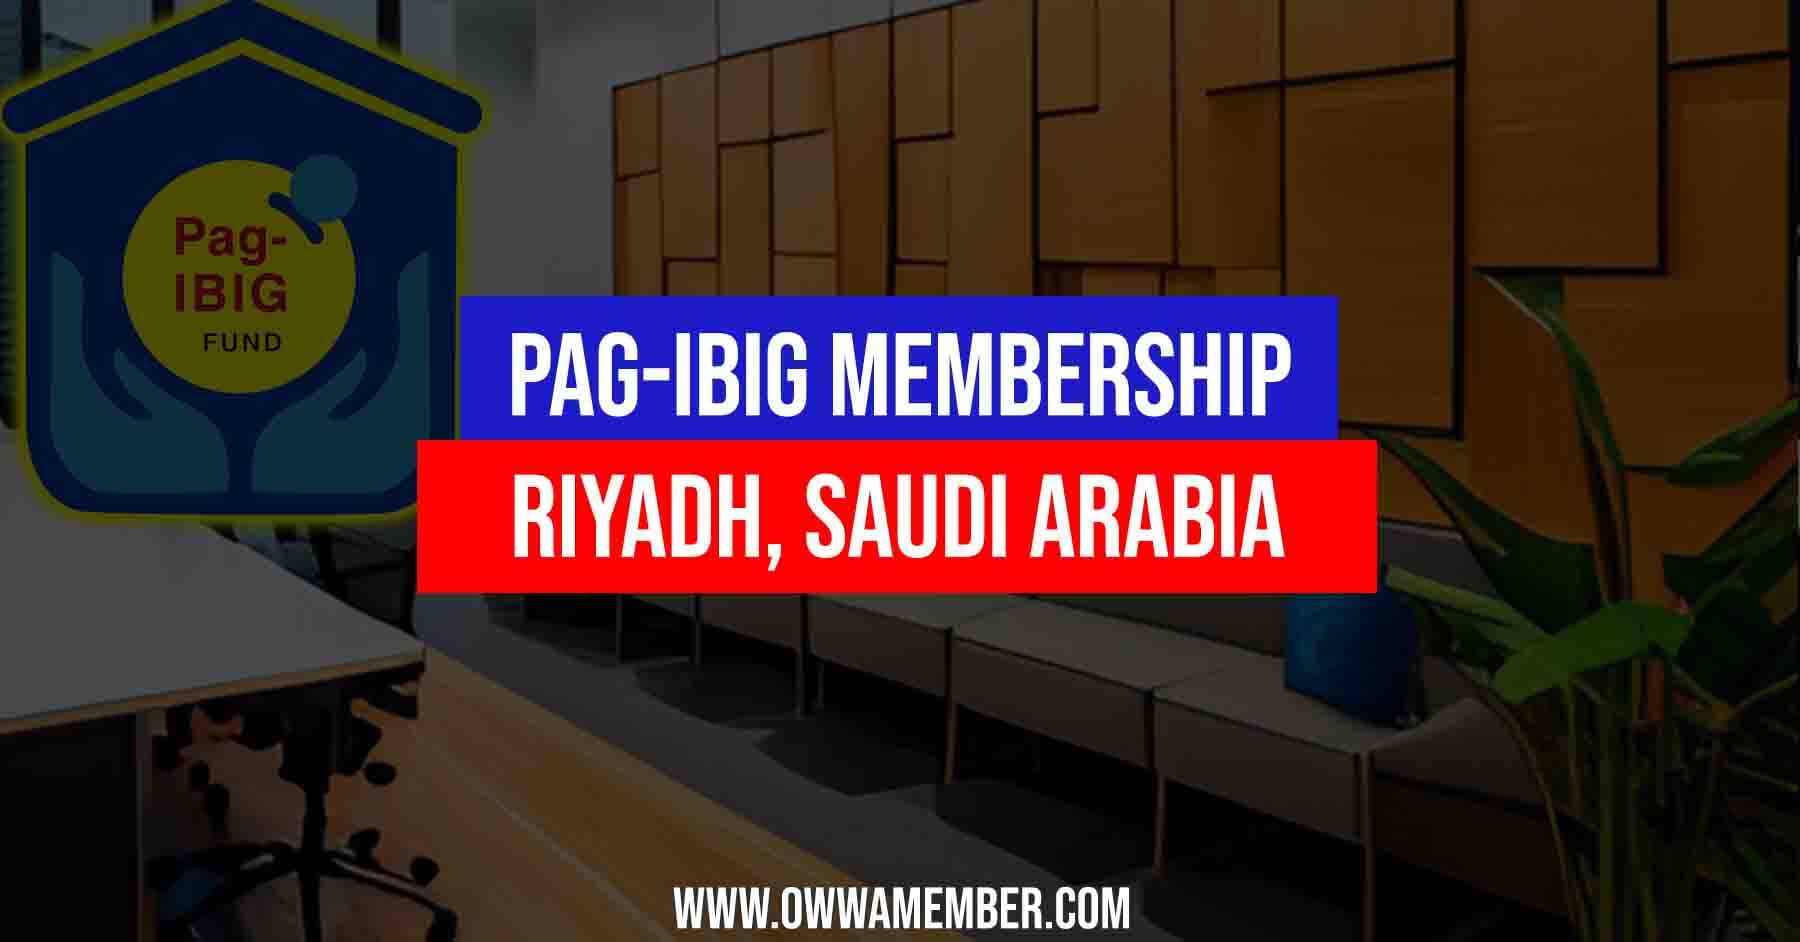 pagibig membership application in riyadh saudi arabia